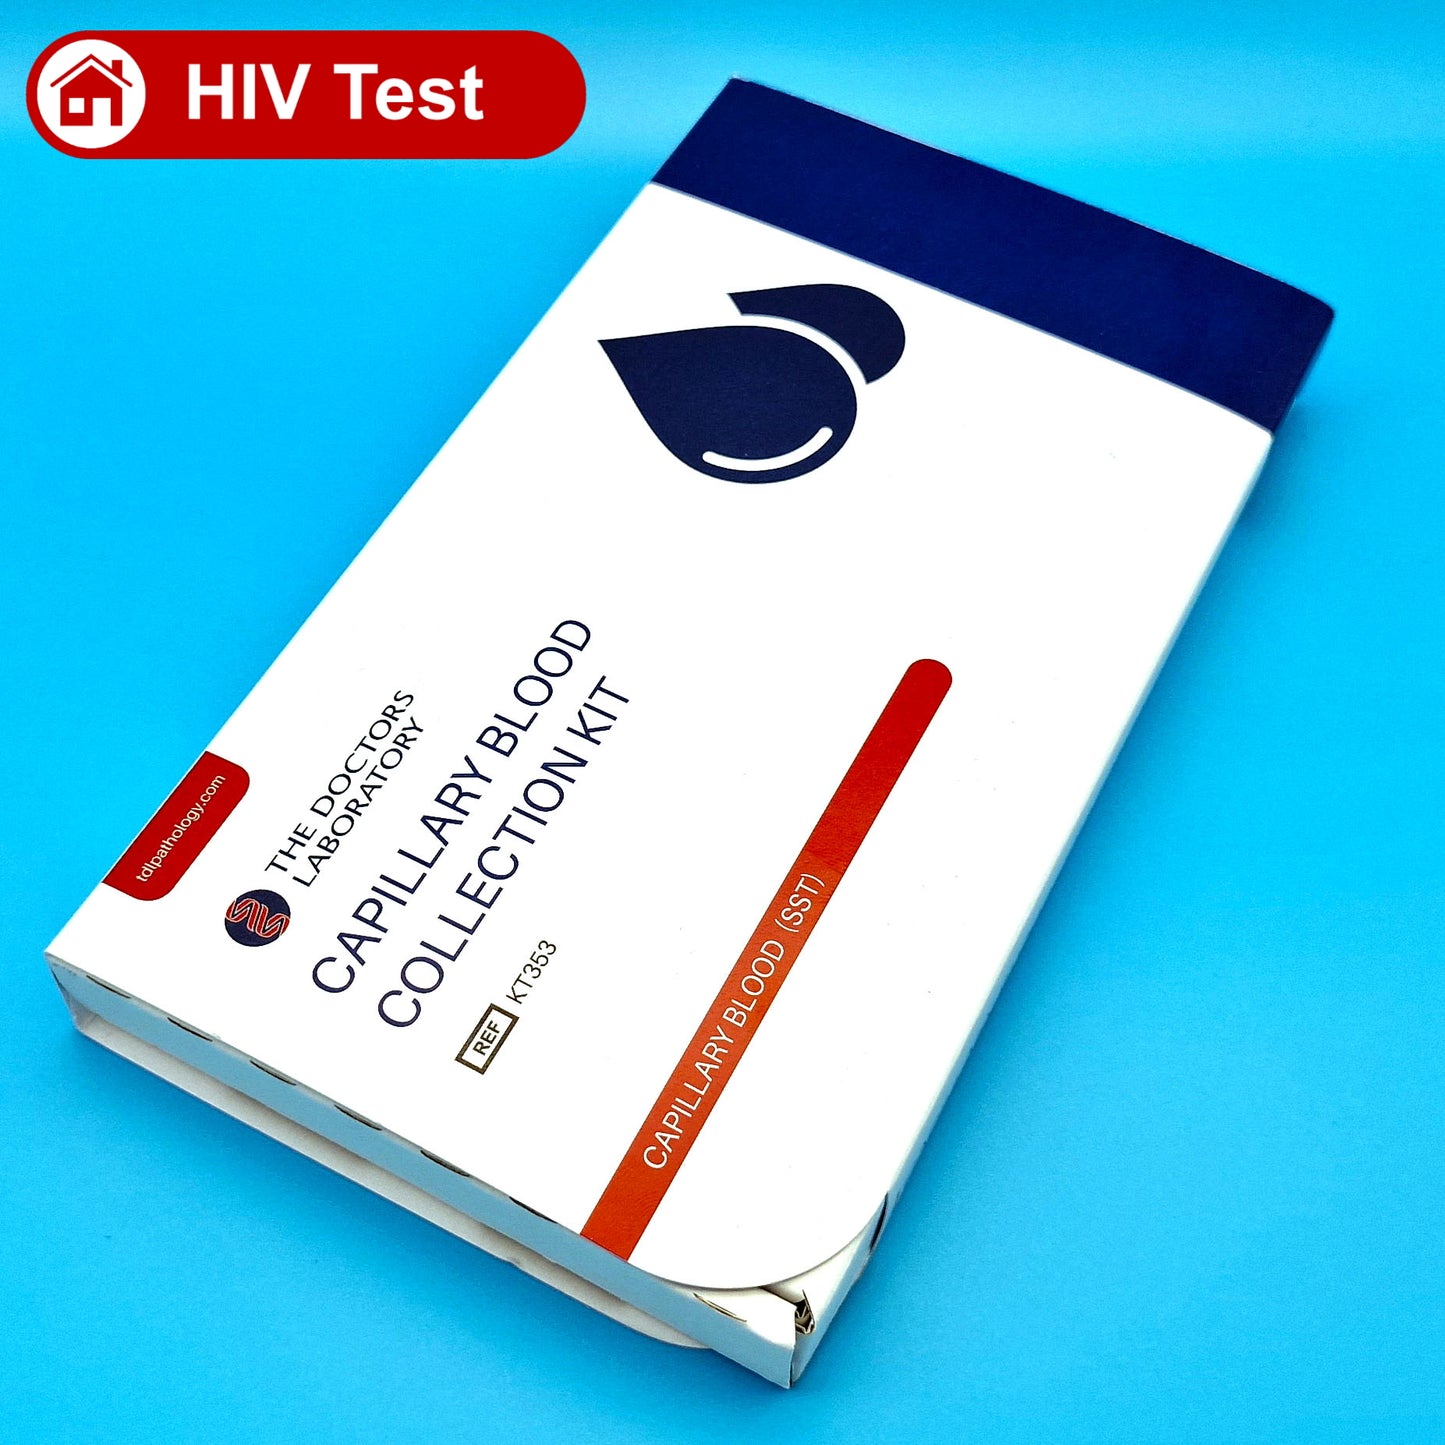 Home HIV Test